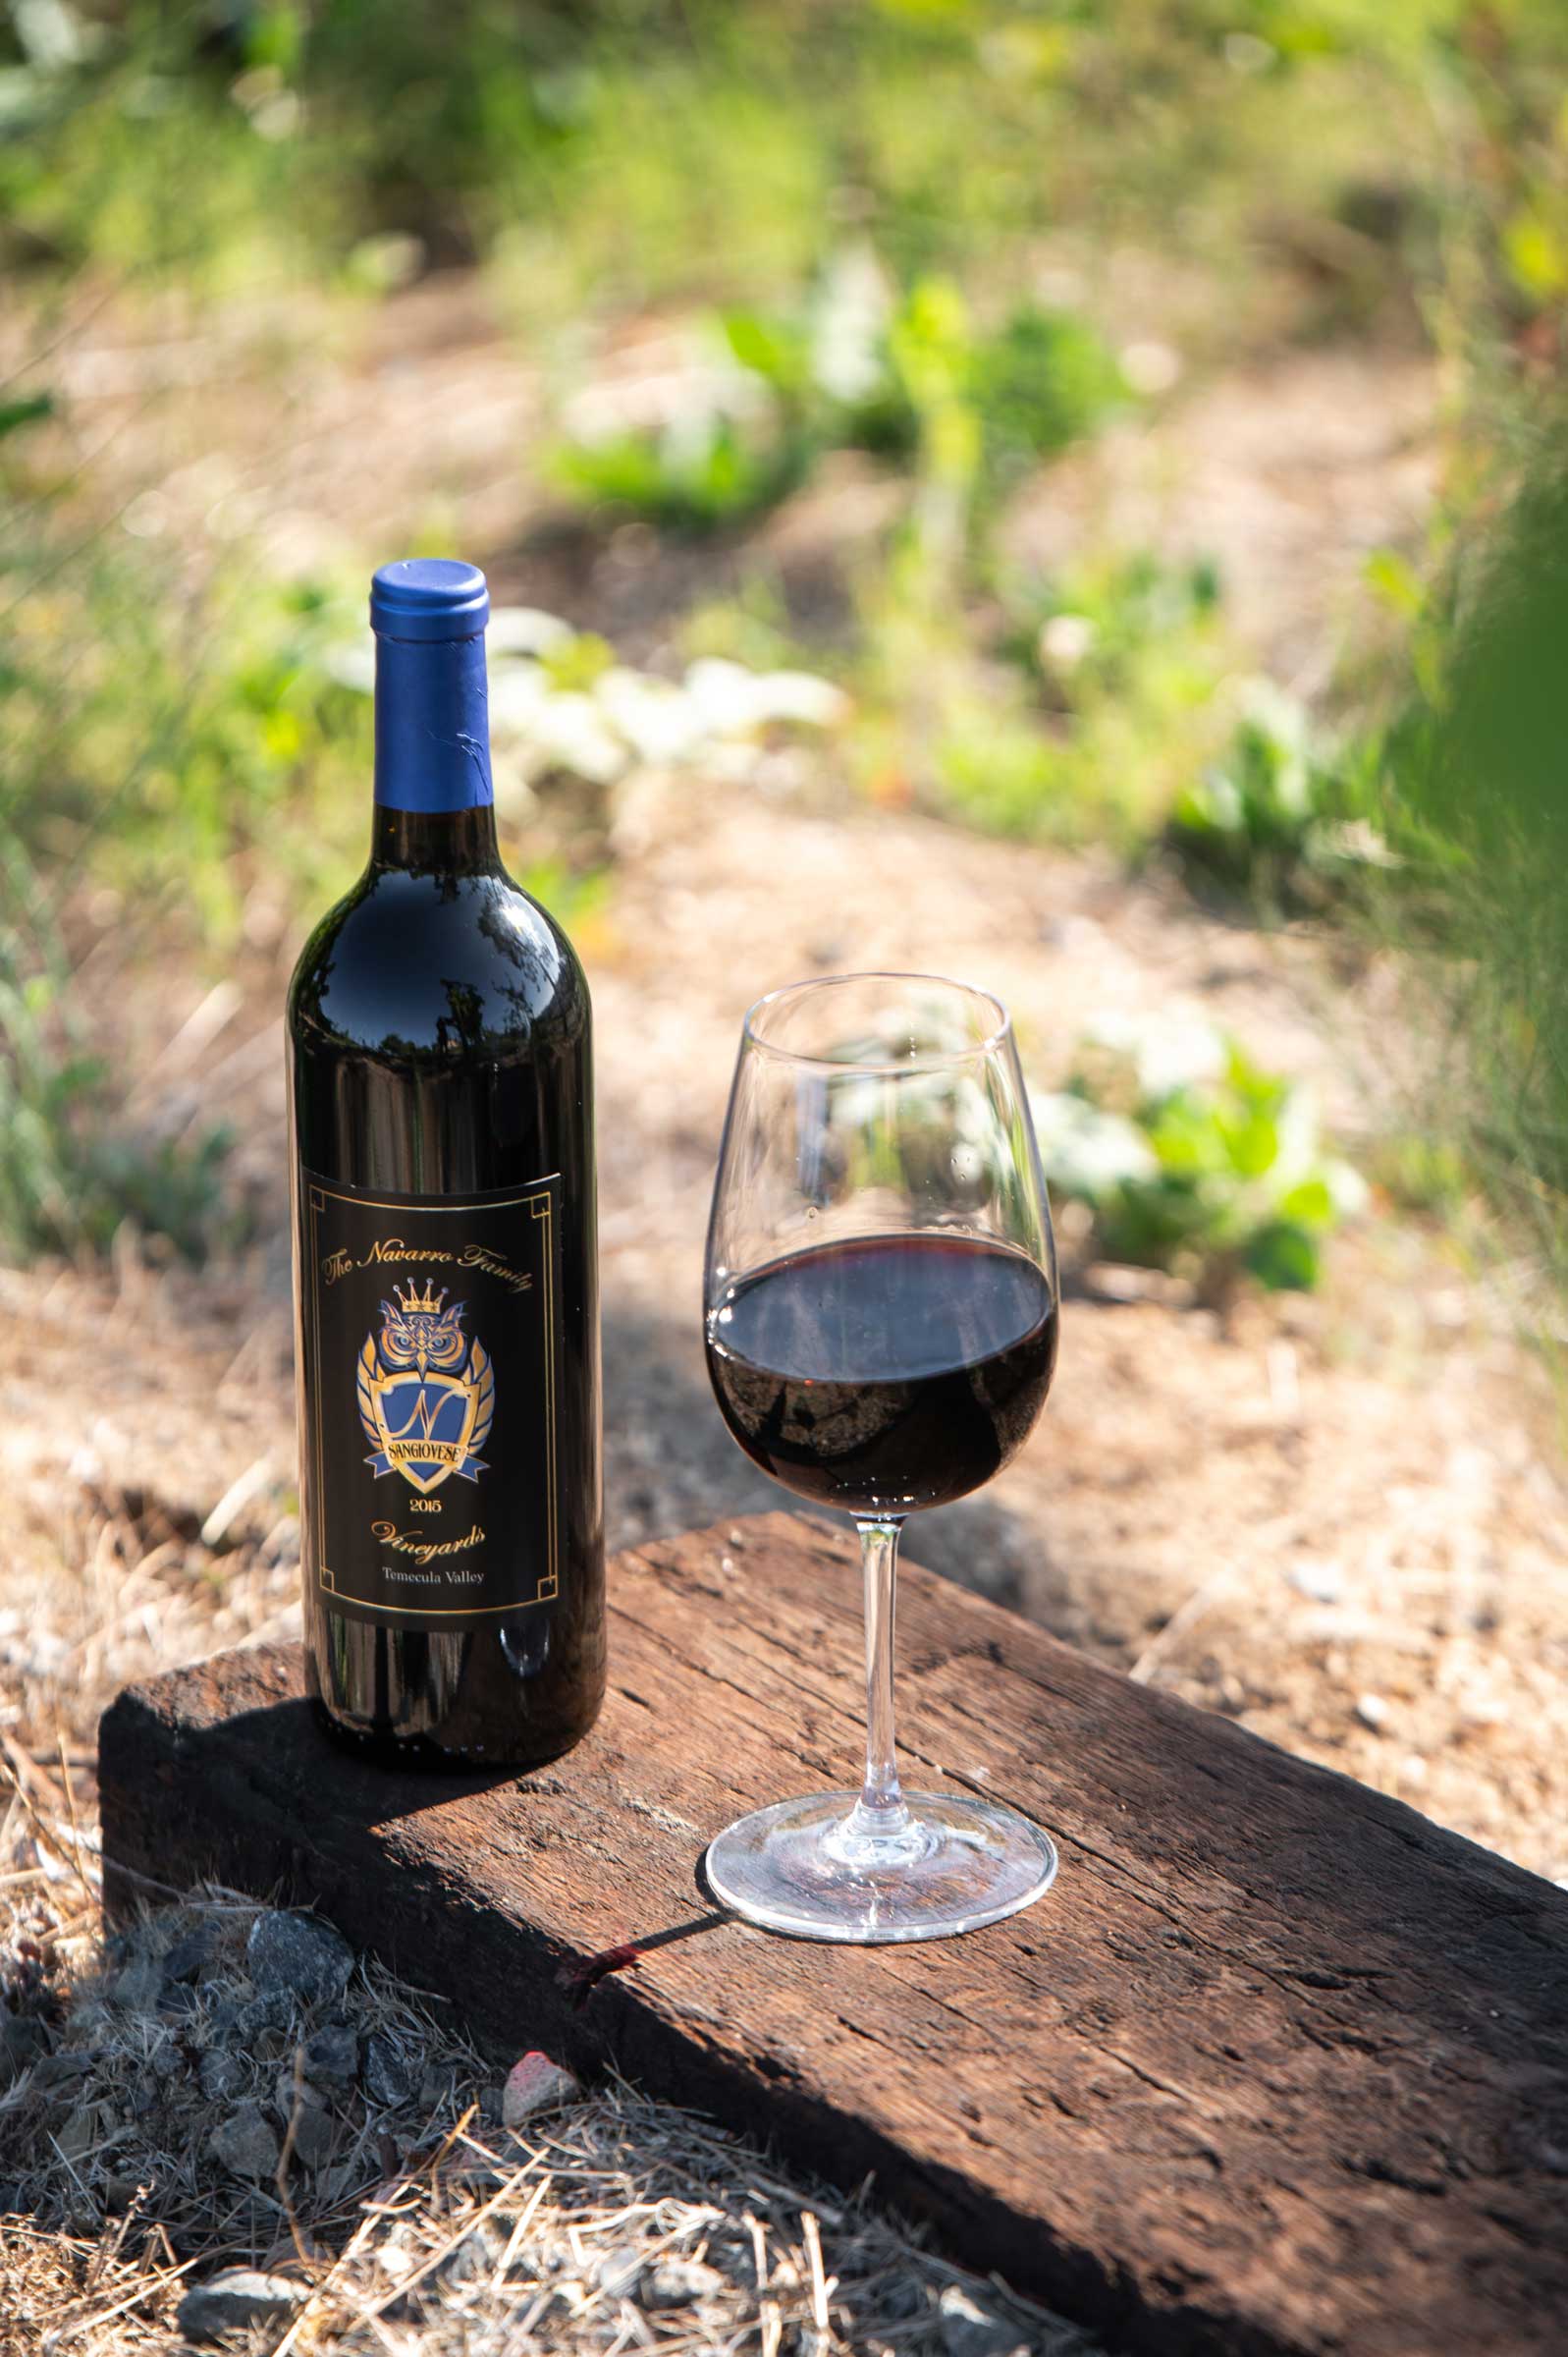 bottle of Navarro Family Vineyards Sangiovese beside a full glass on a wooden bench among the vines